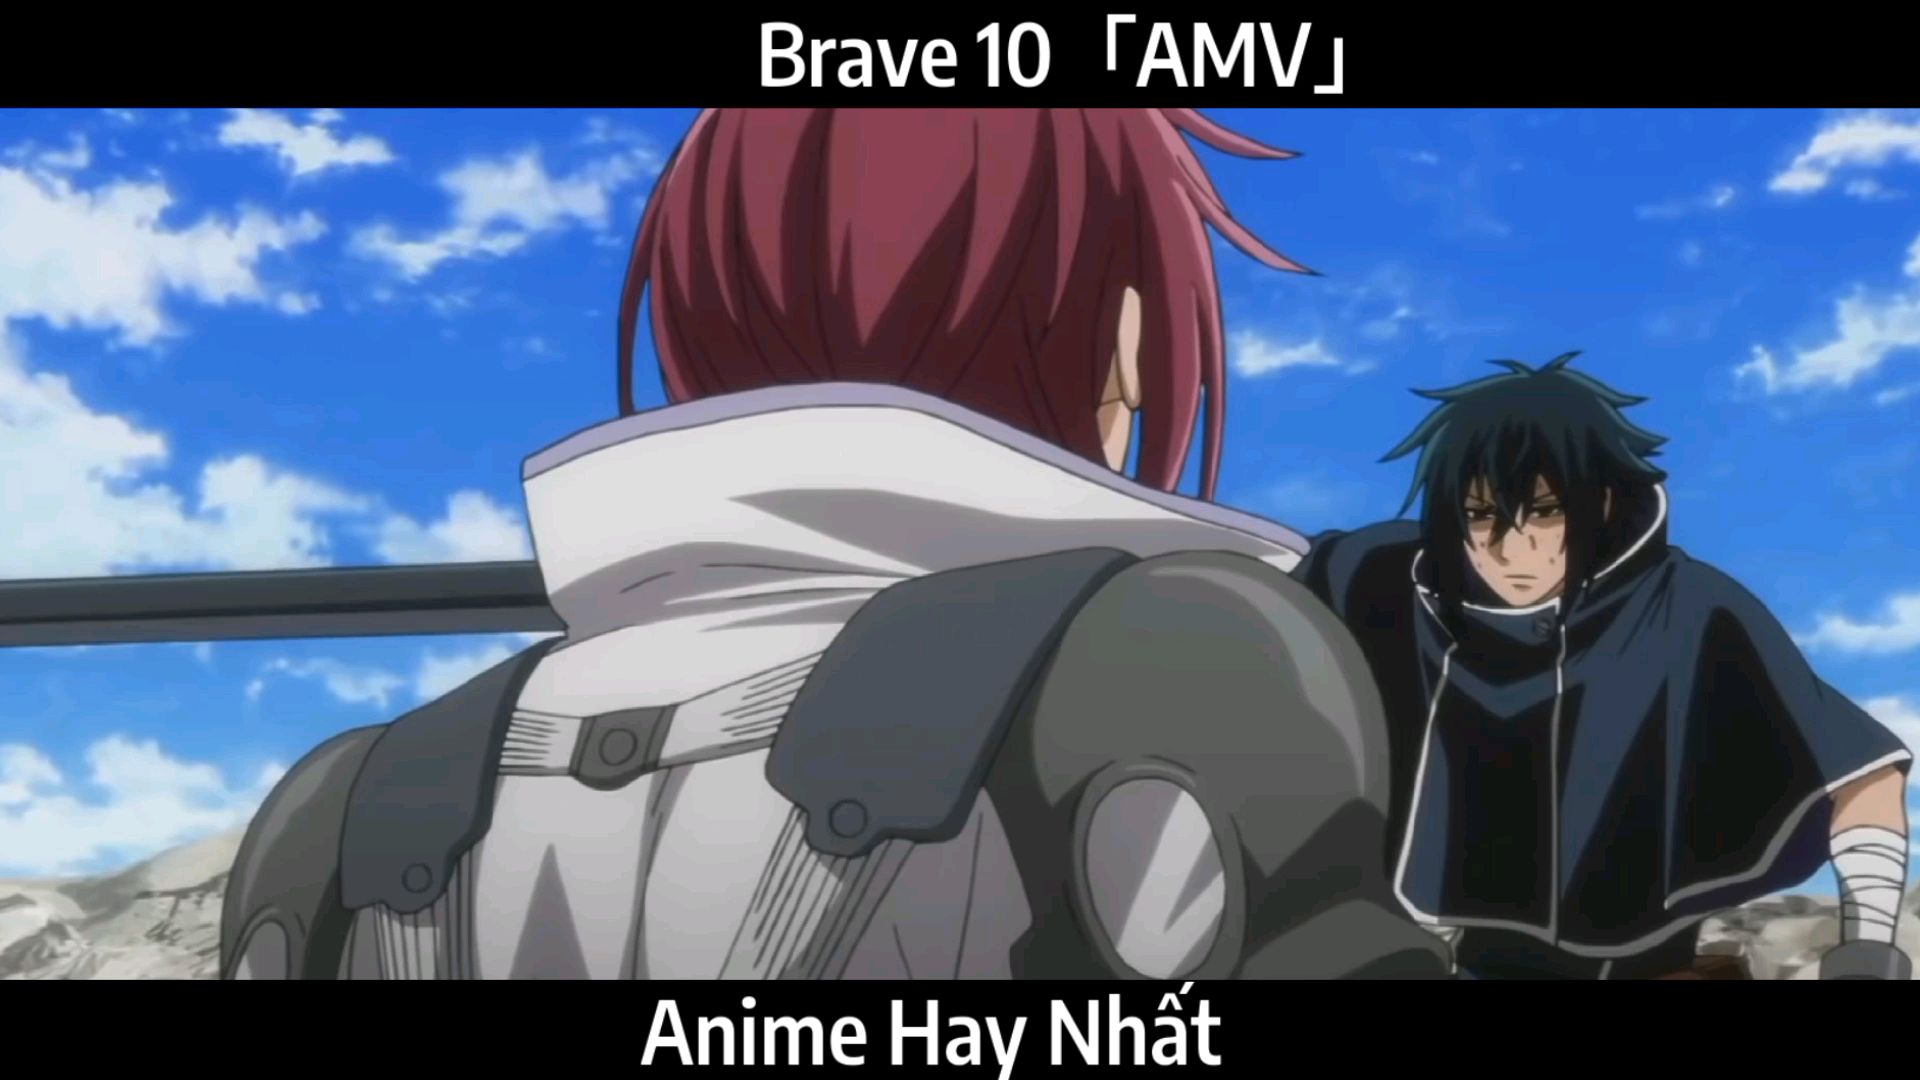 Brave10 Anime Review, by duchessliz | Anime-Planet